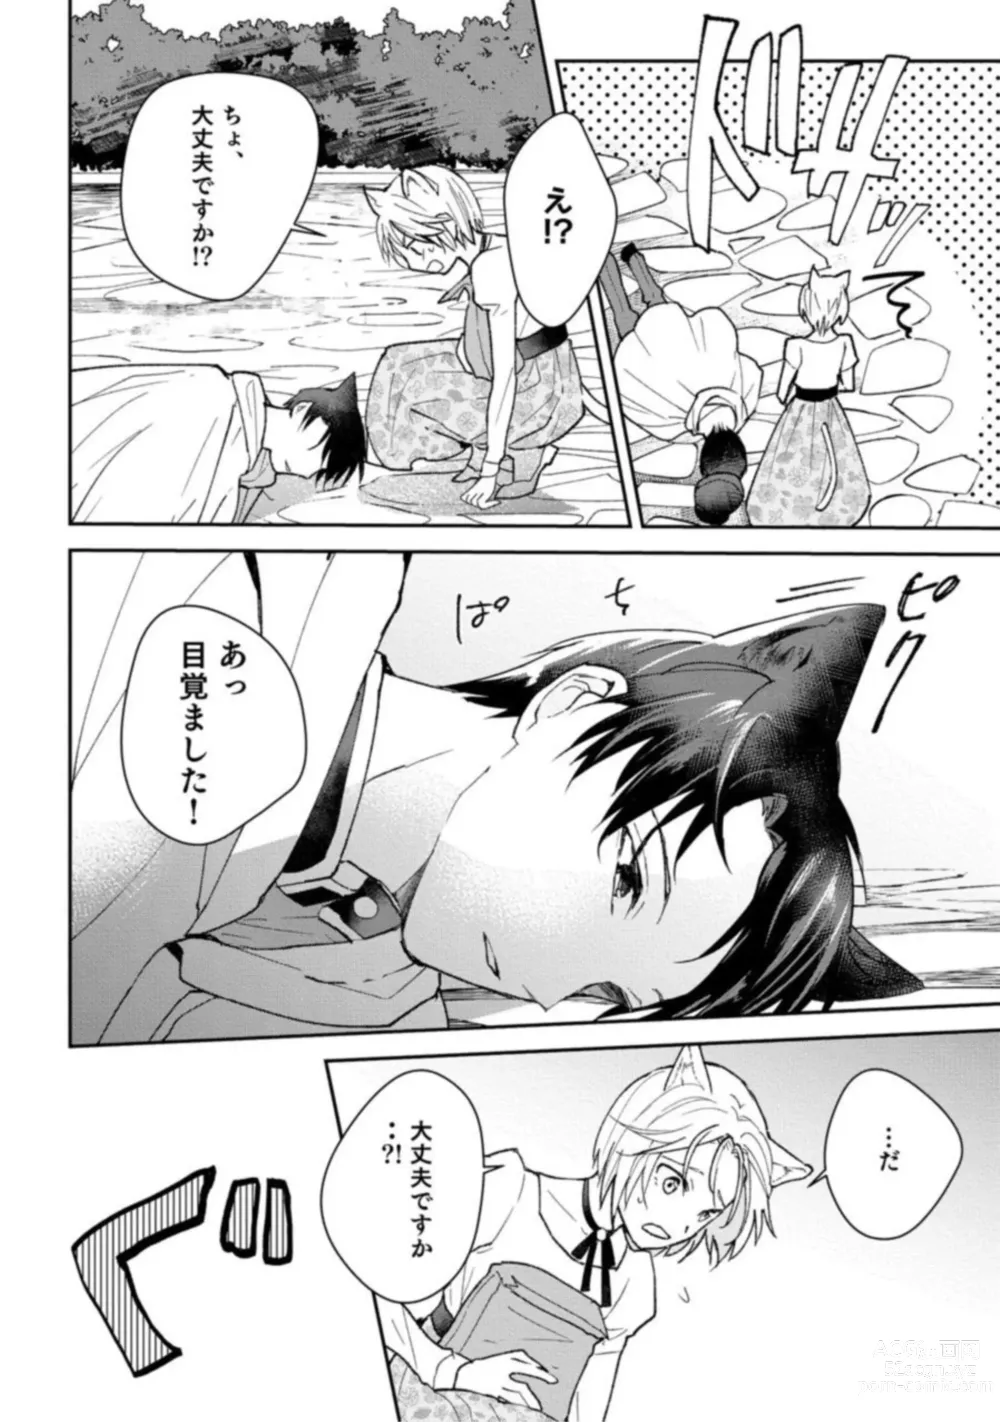 Page 10 of manga Kemonohito Kishi no Keiai STORY.1